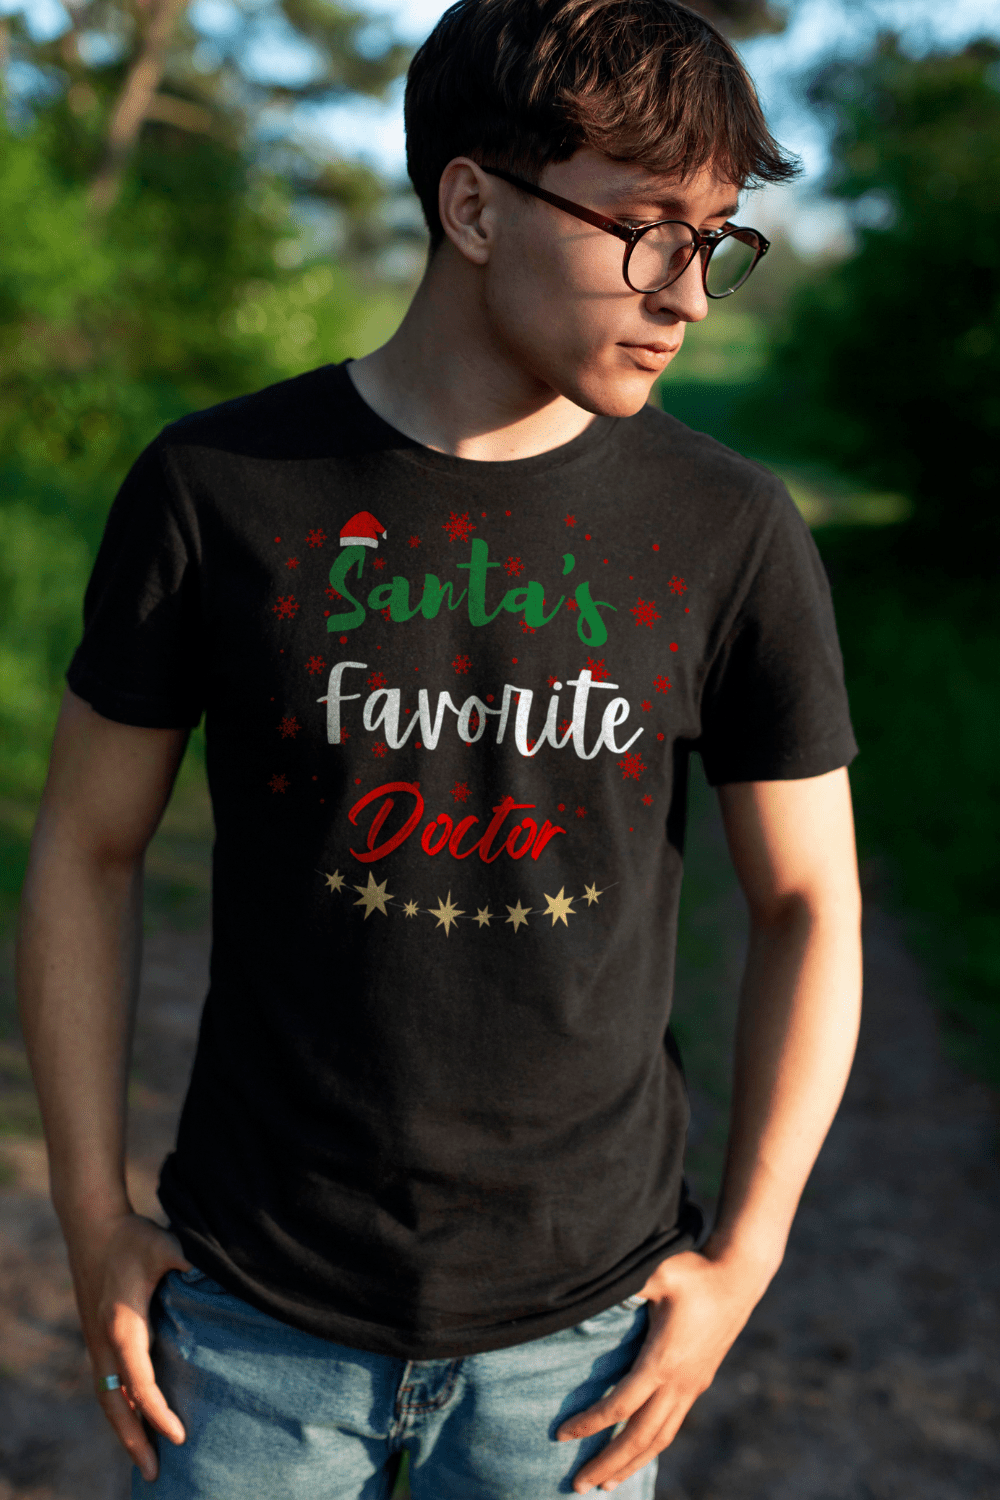 Trending And Evergreen Christmas T-shirt Designs Pinterest image.